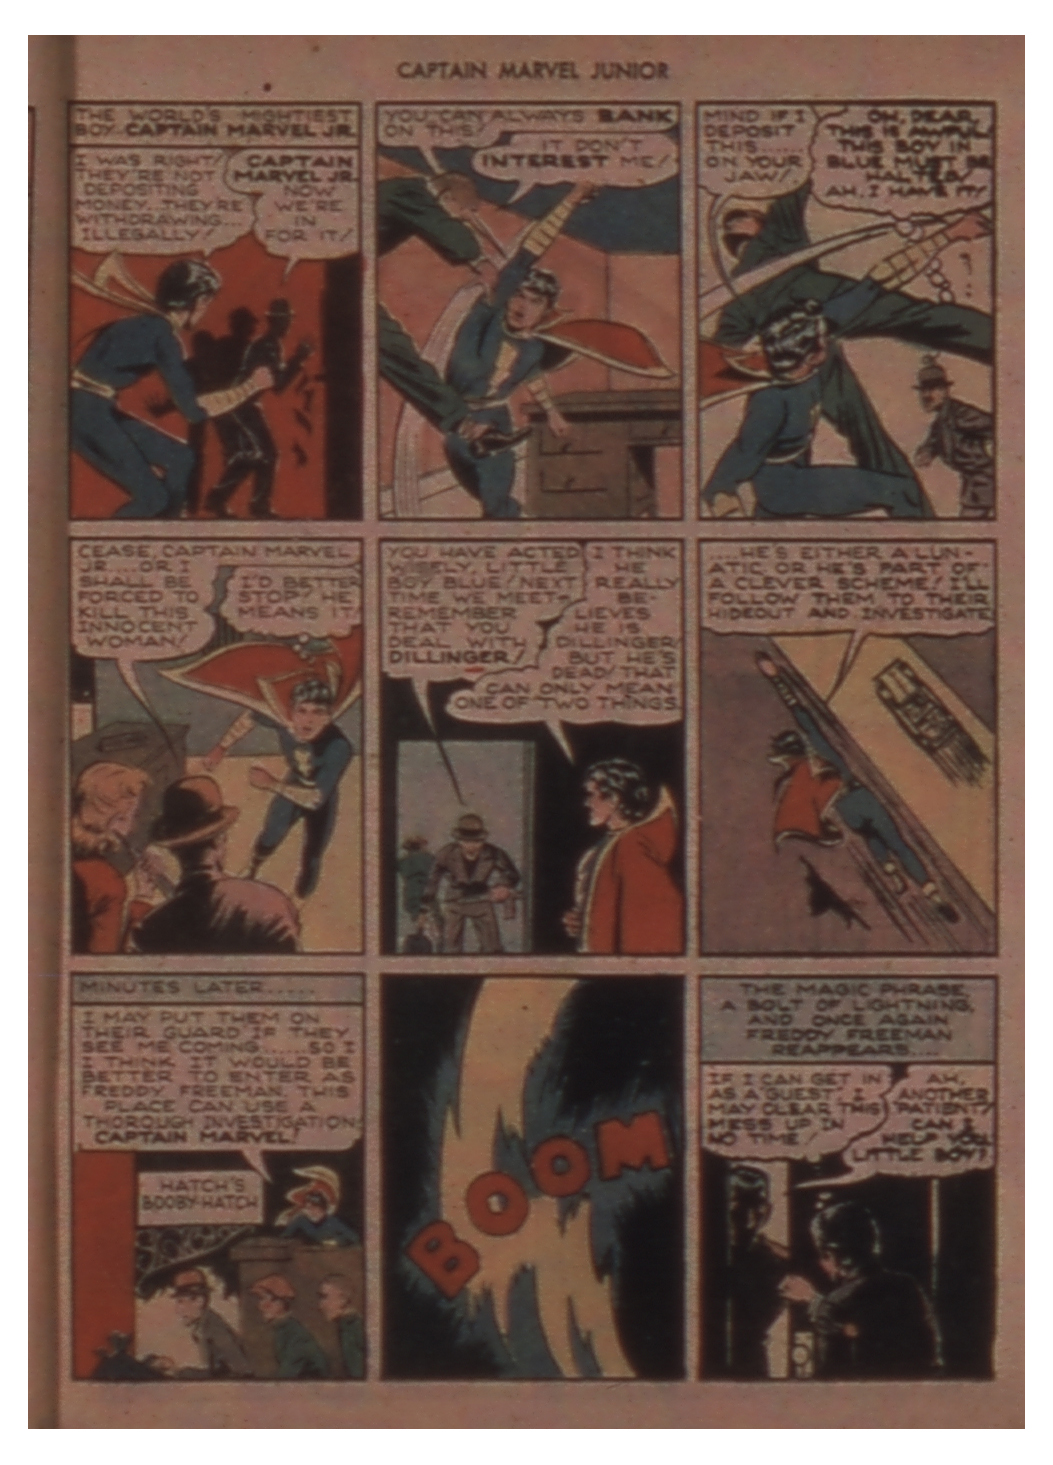 Read online Captain Marvel, Jr. comic -  Issue #32 - 17